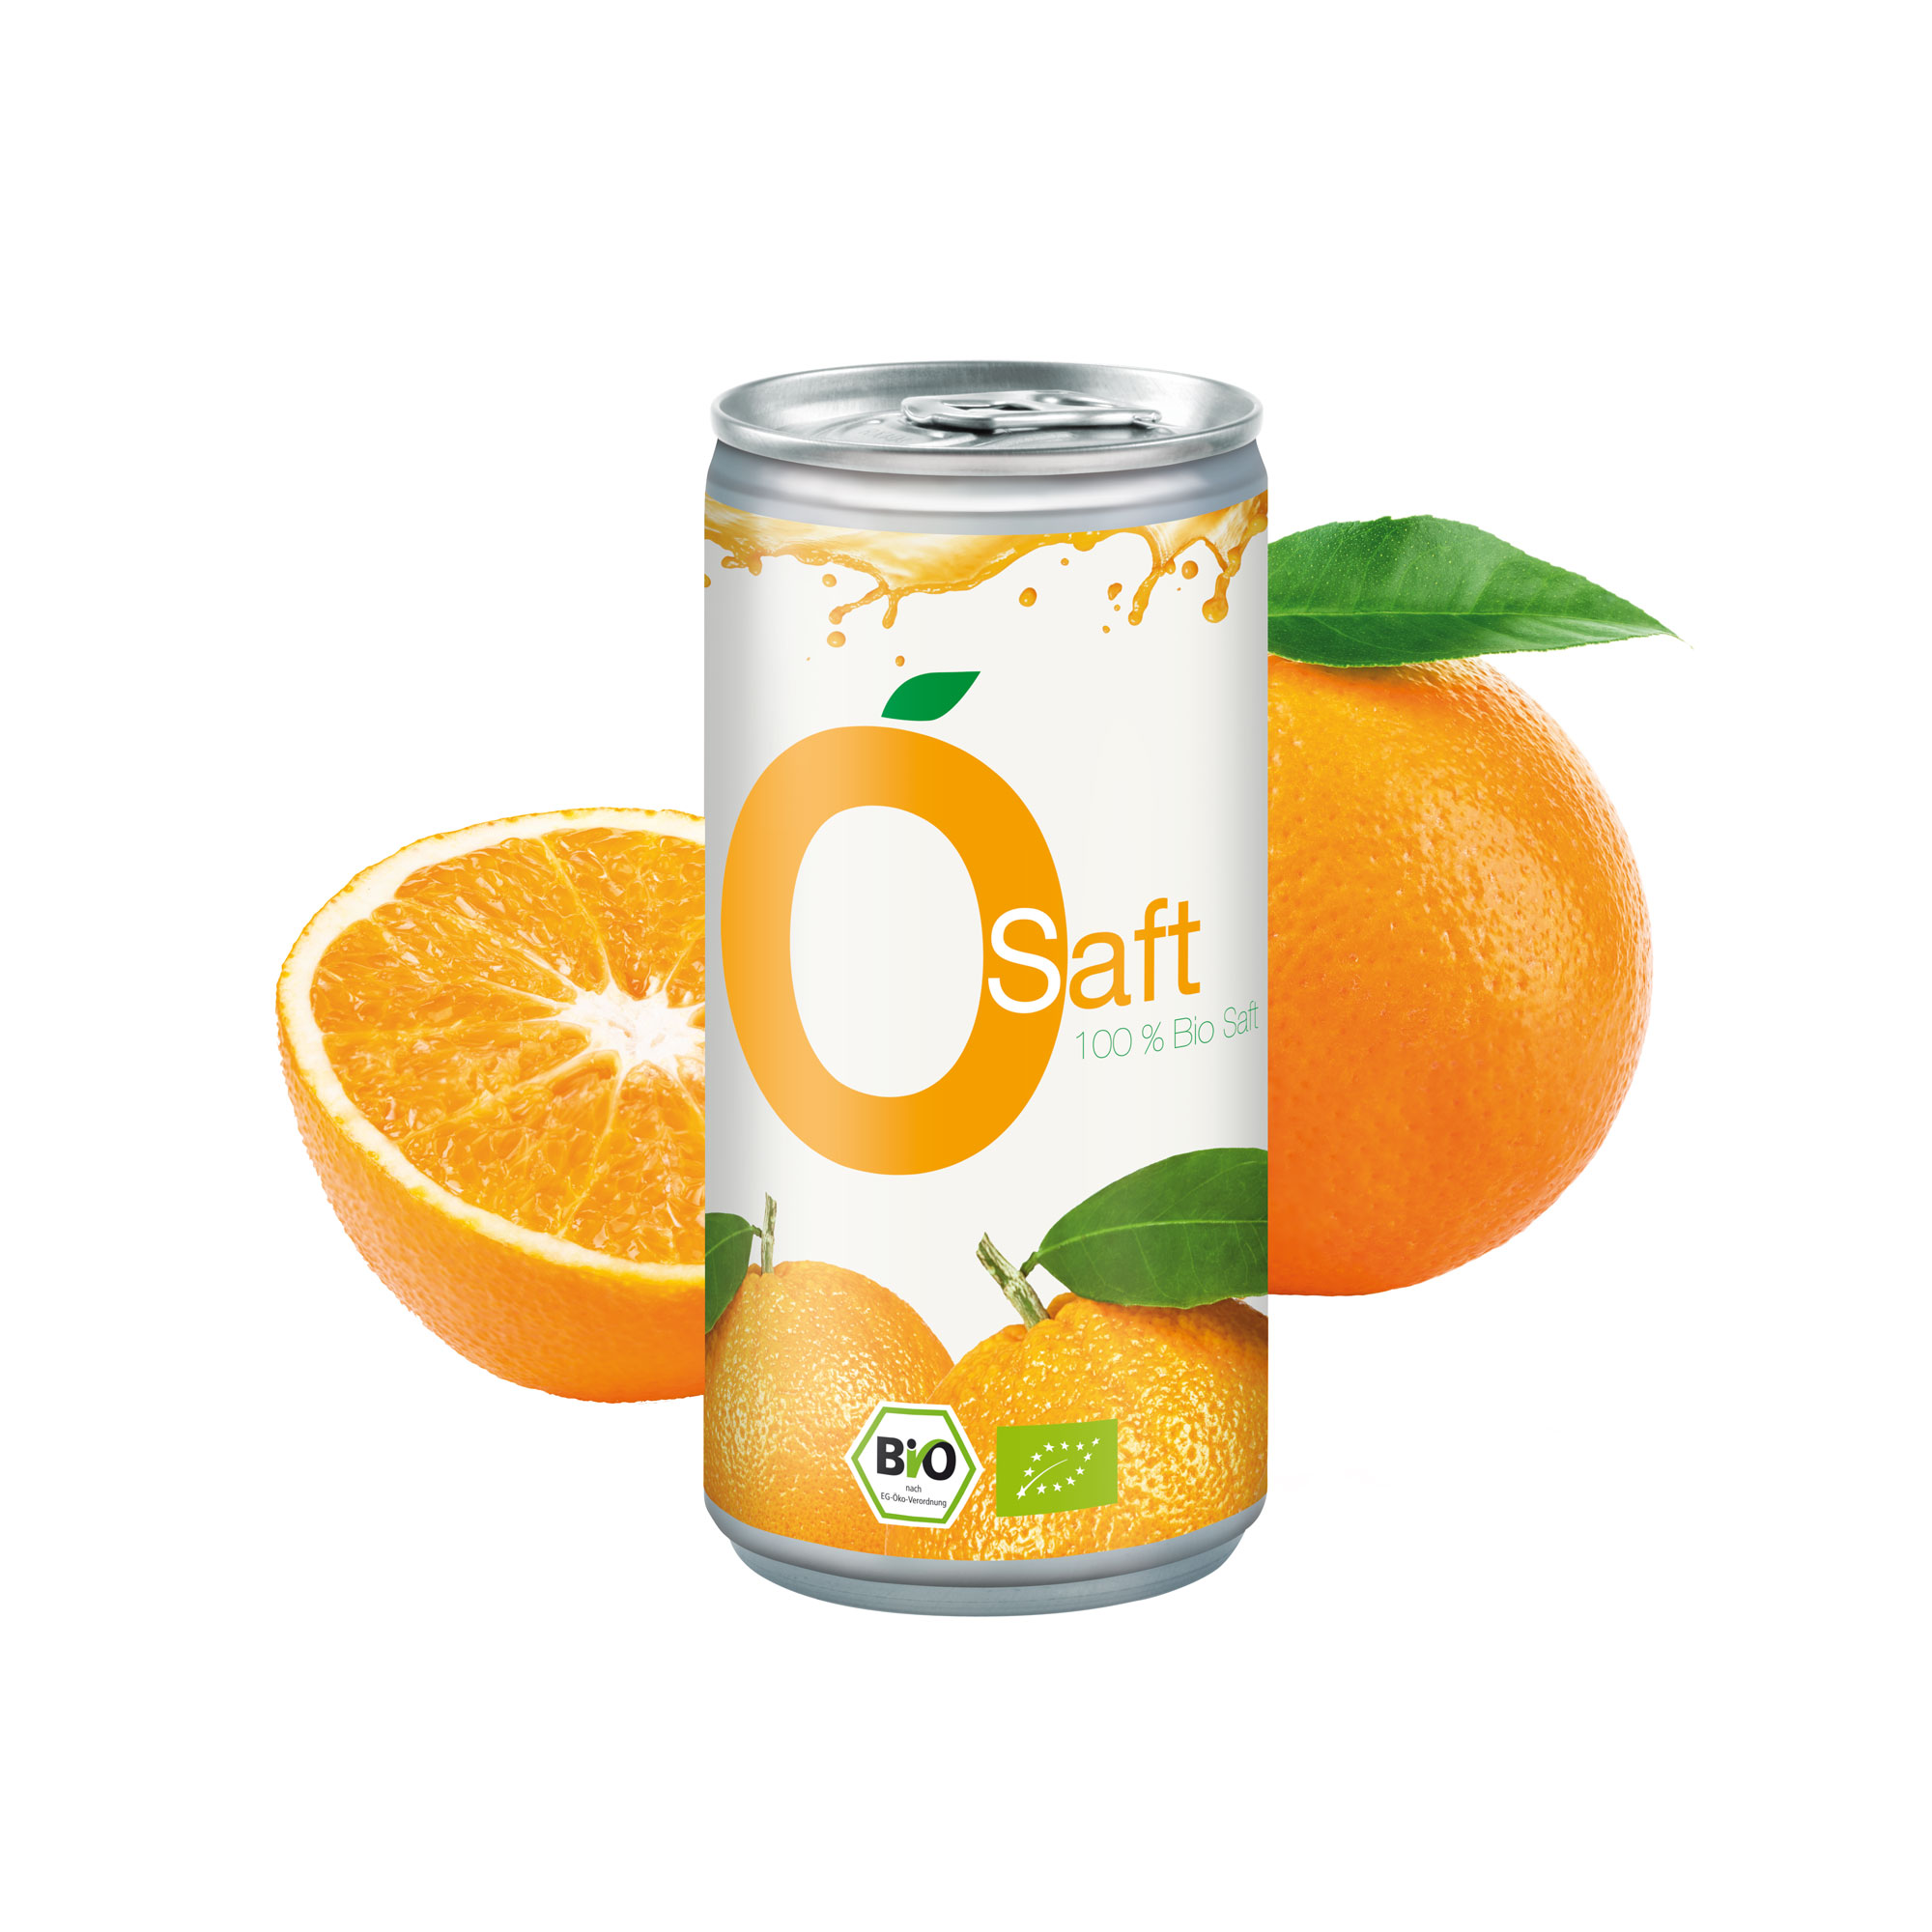 Organic Vitamin C Rich Fruit Juice - Upwey